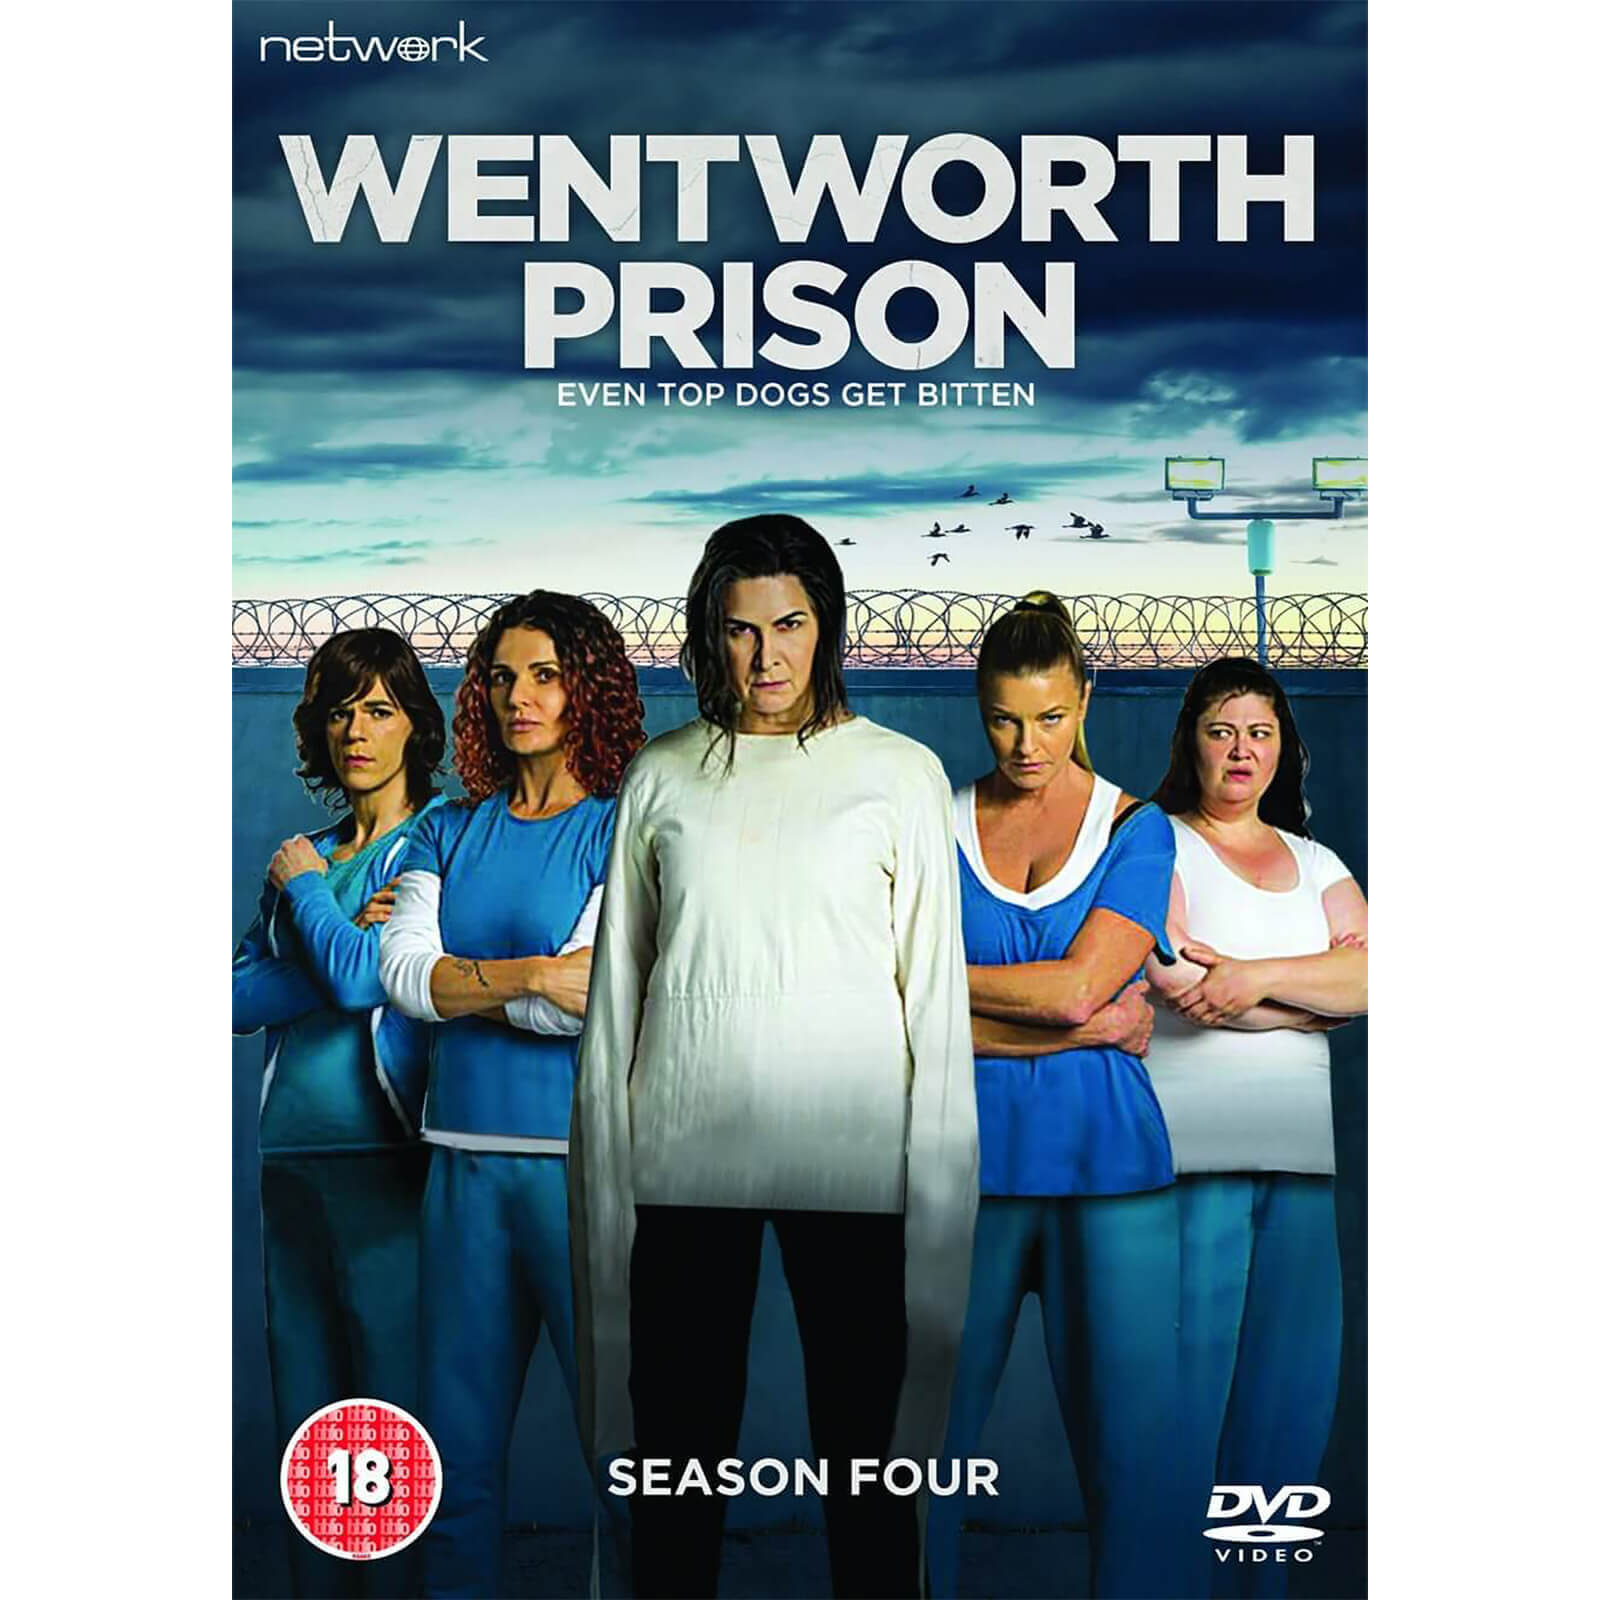 Wentworth Prison Season Four. 